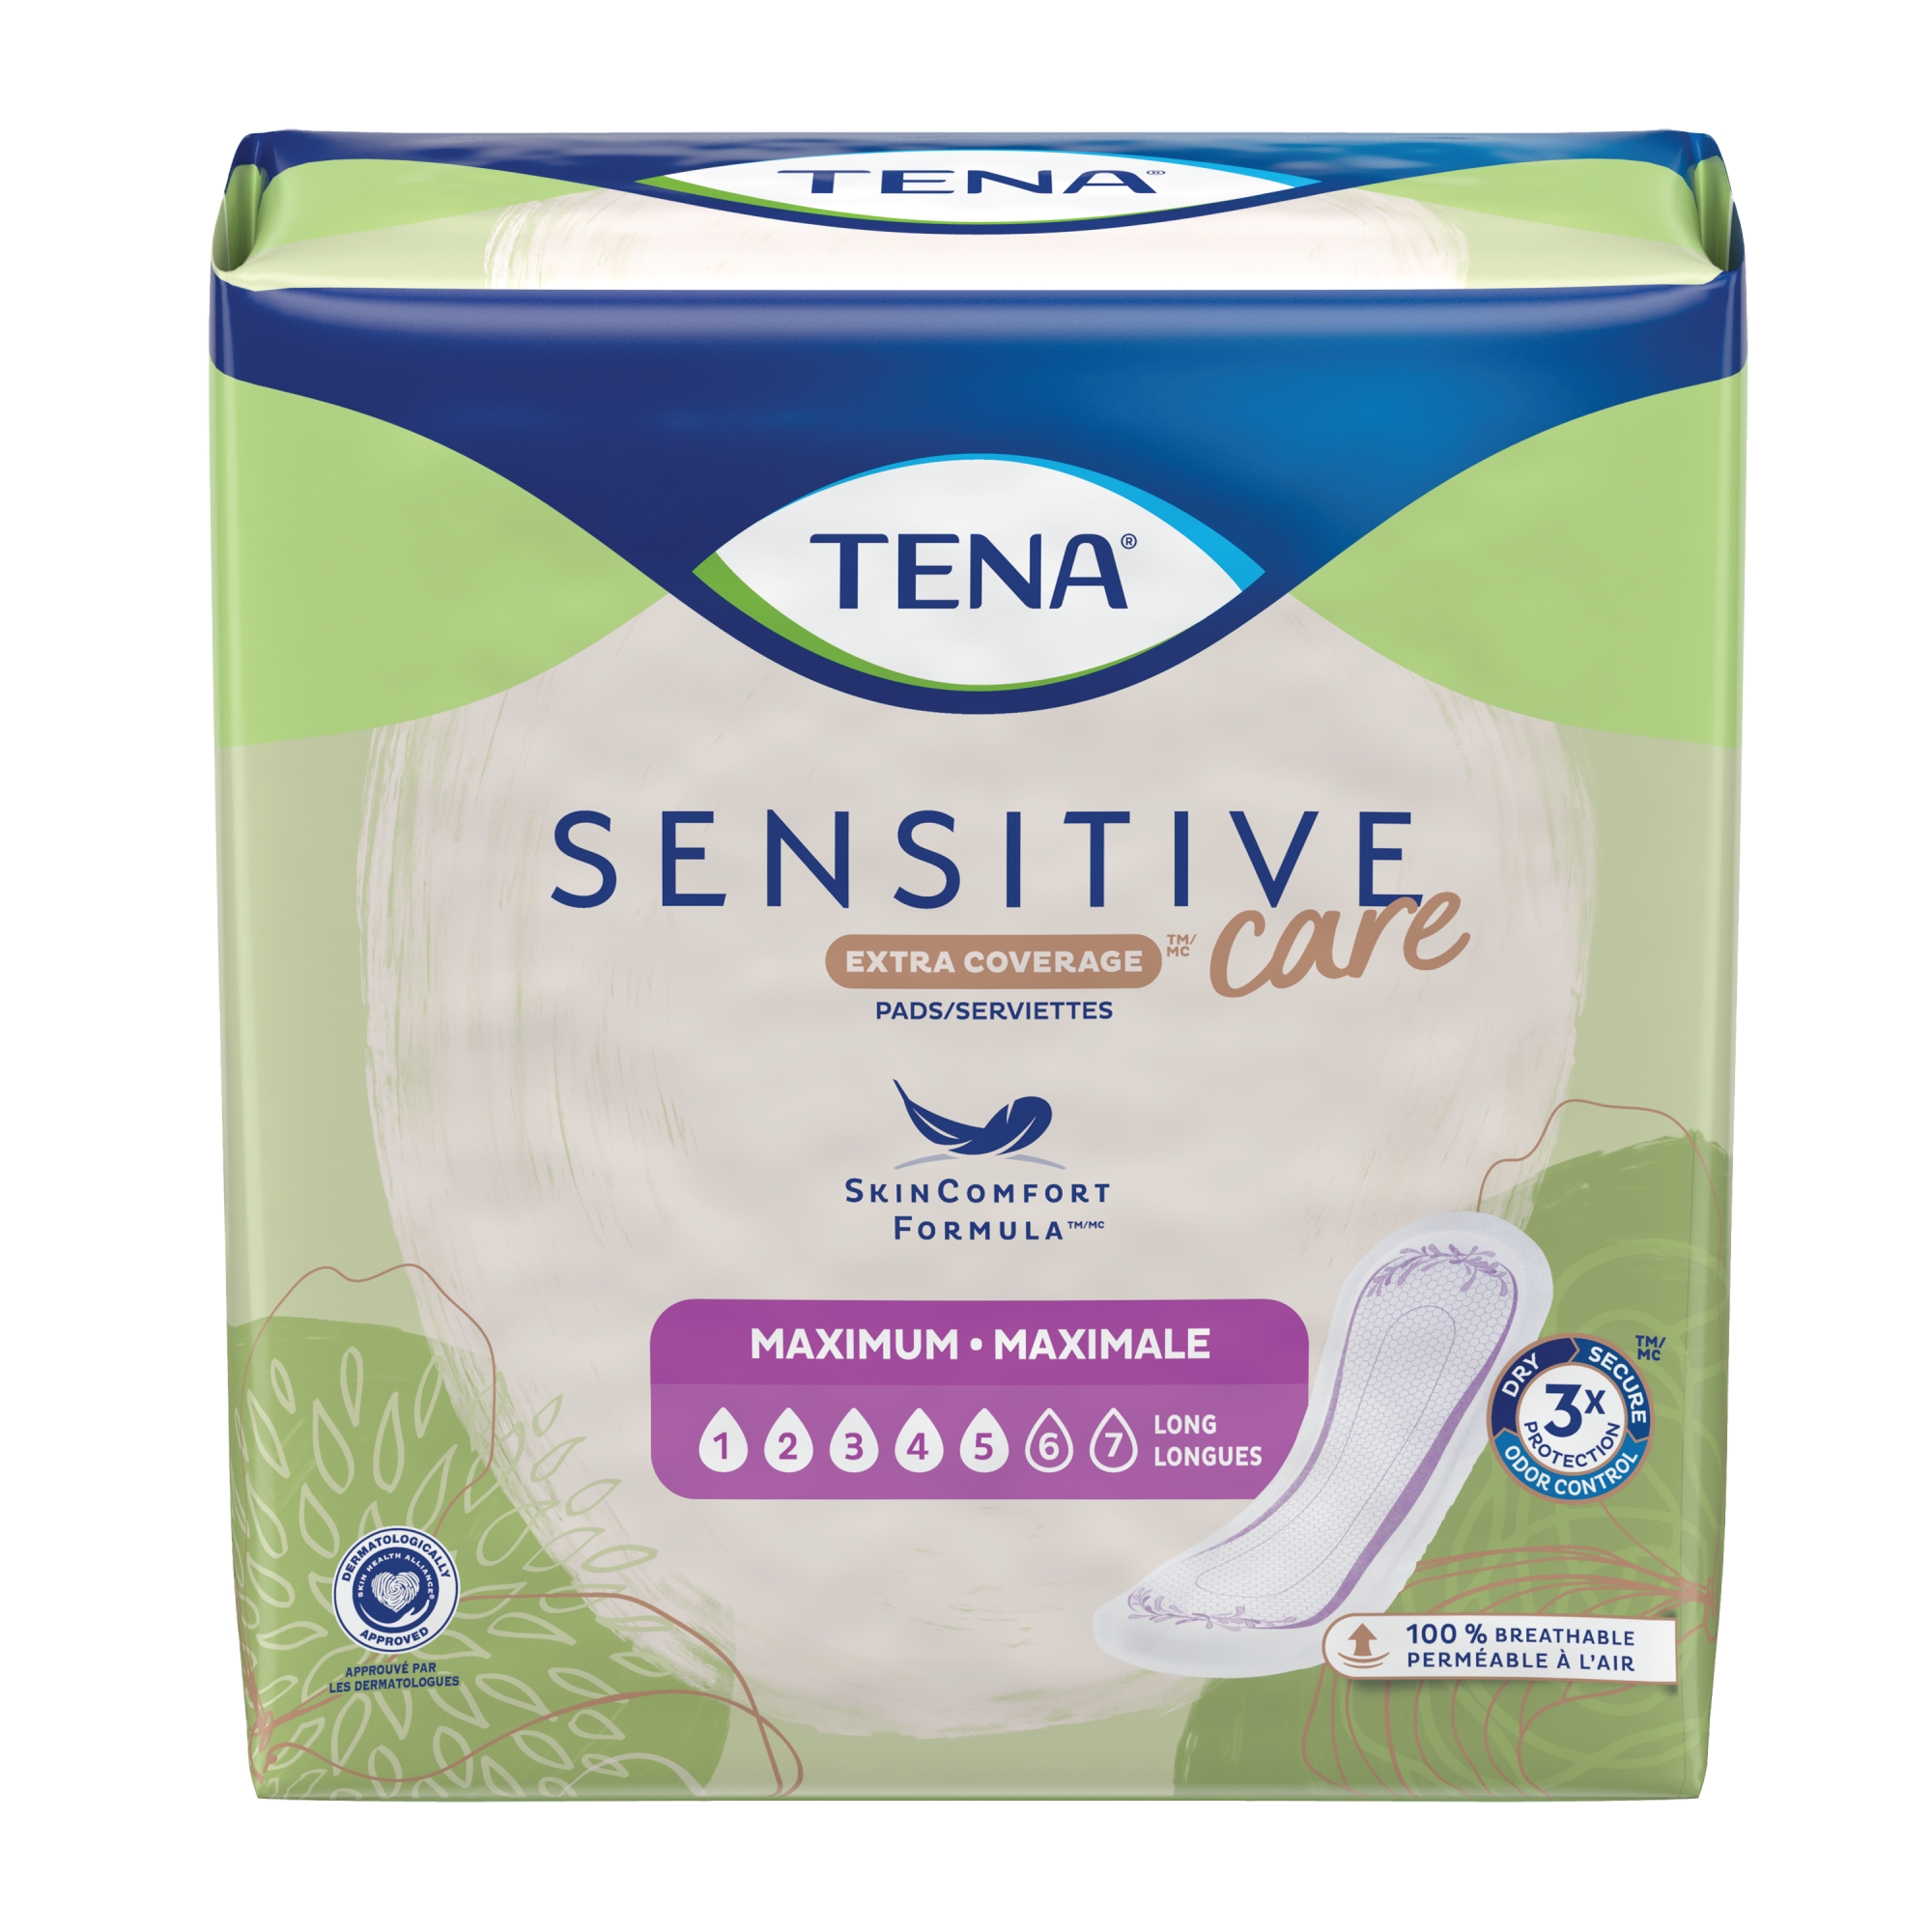 TENA Sensitive Care Extra Coverage Maximum | Incontinence pads